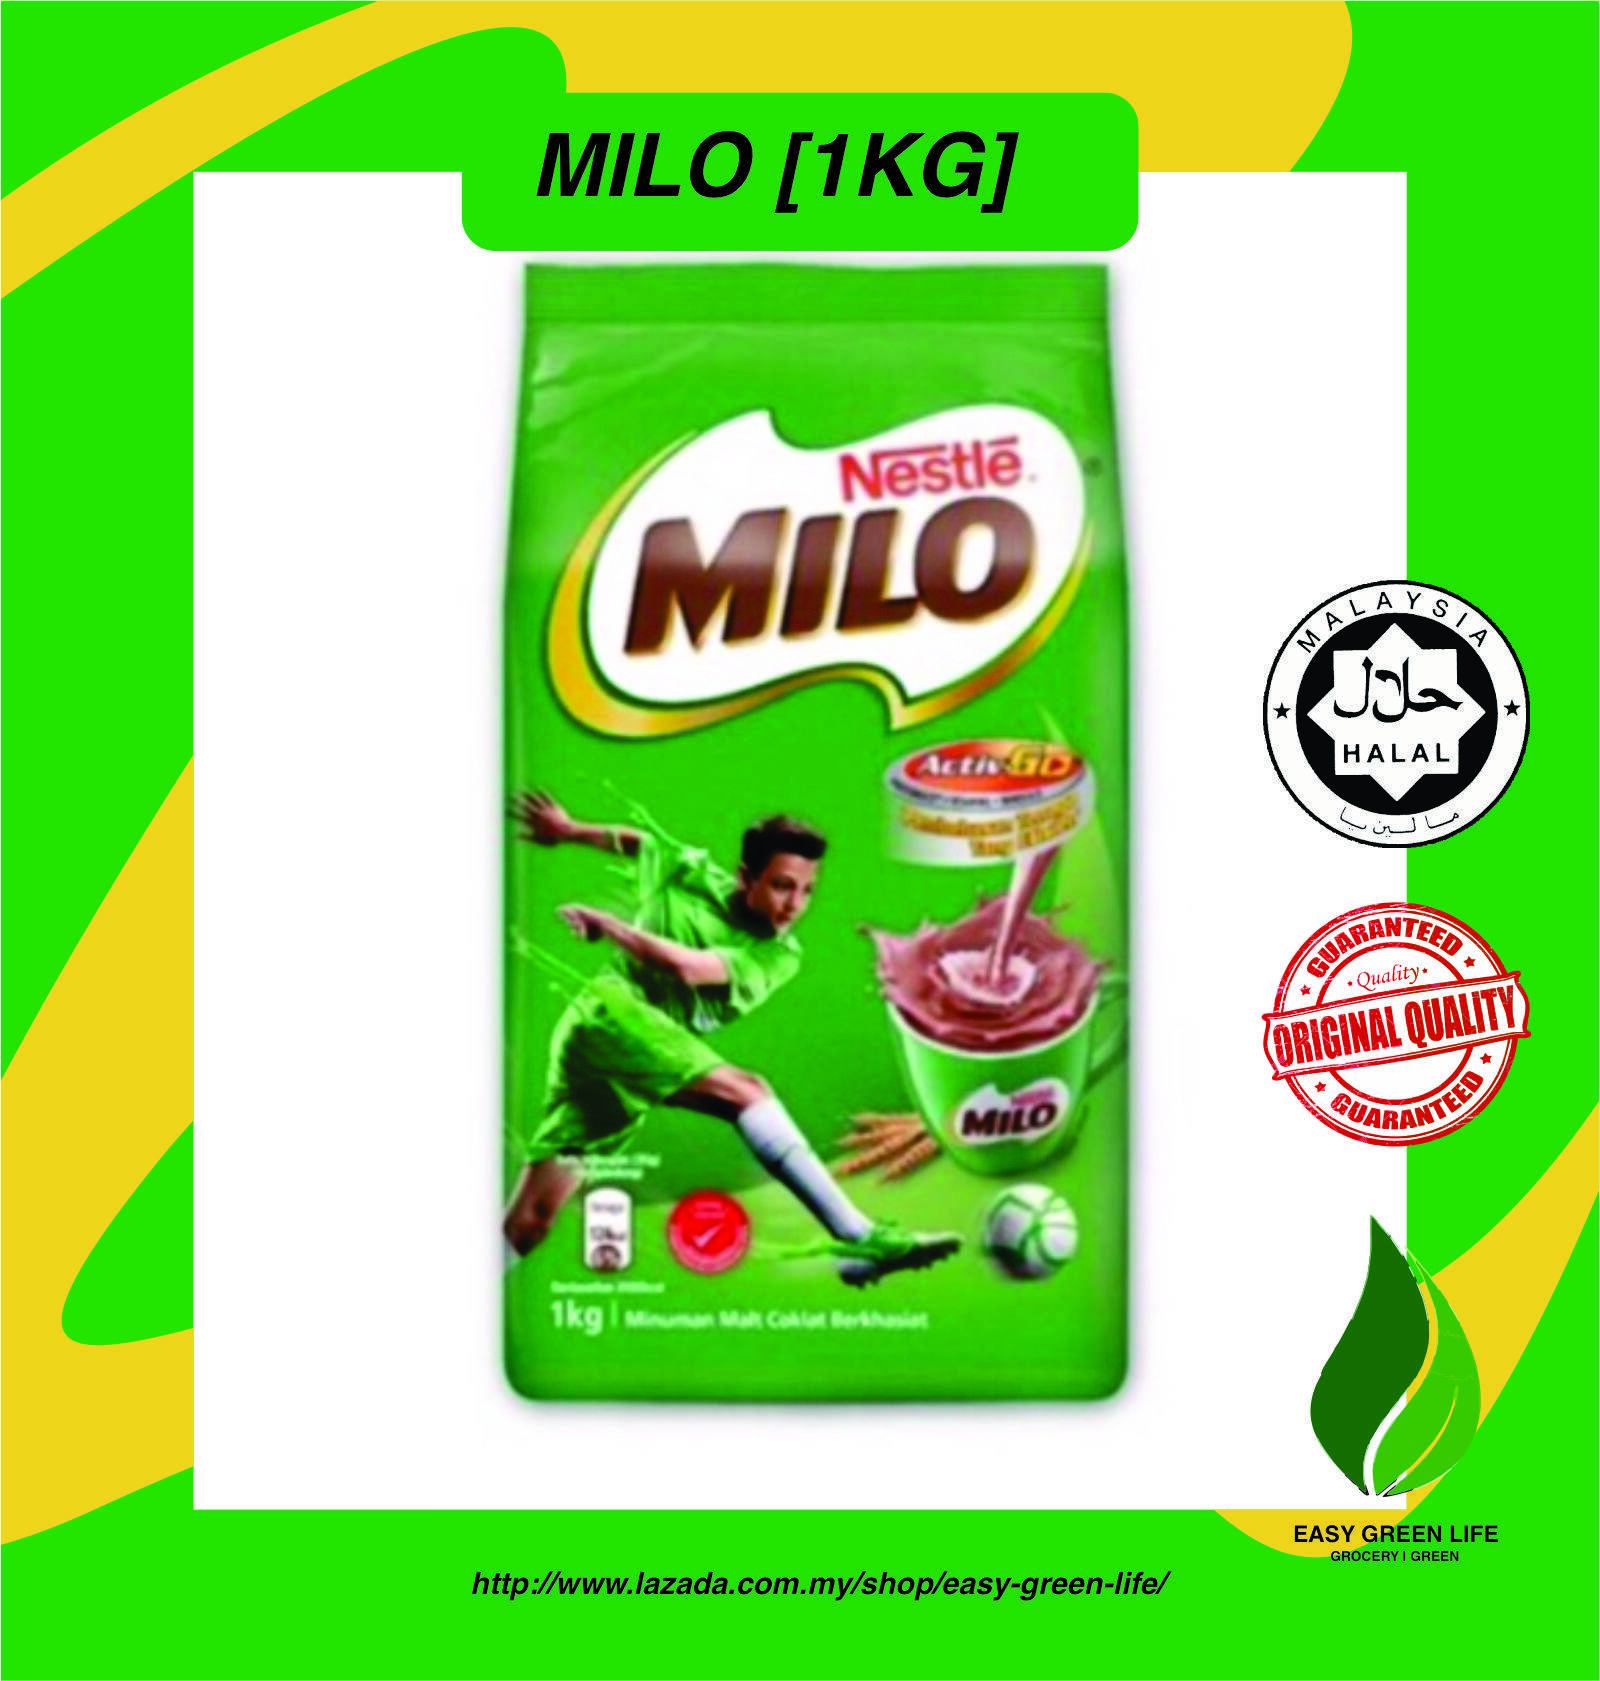 EGL Ready Stock Milo 1(KG) Packet